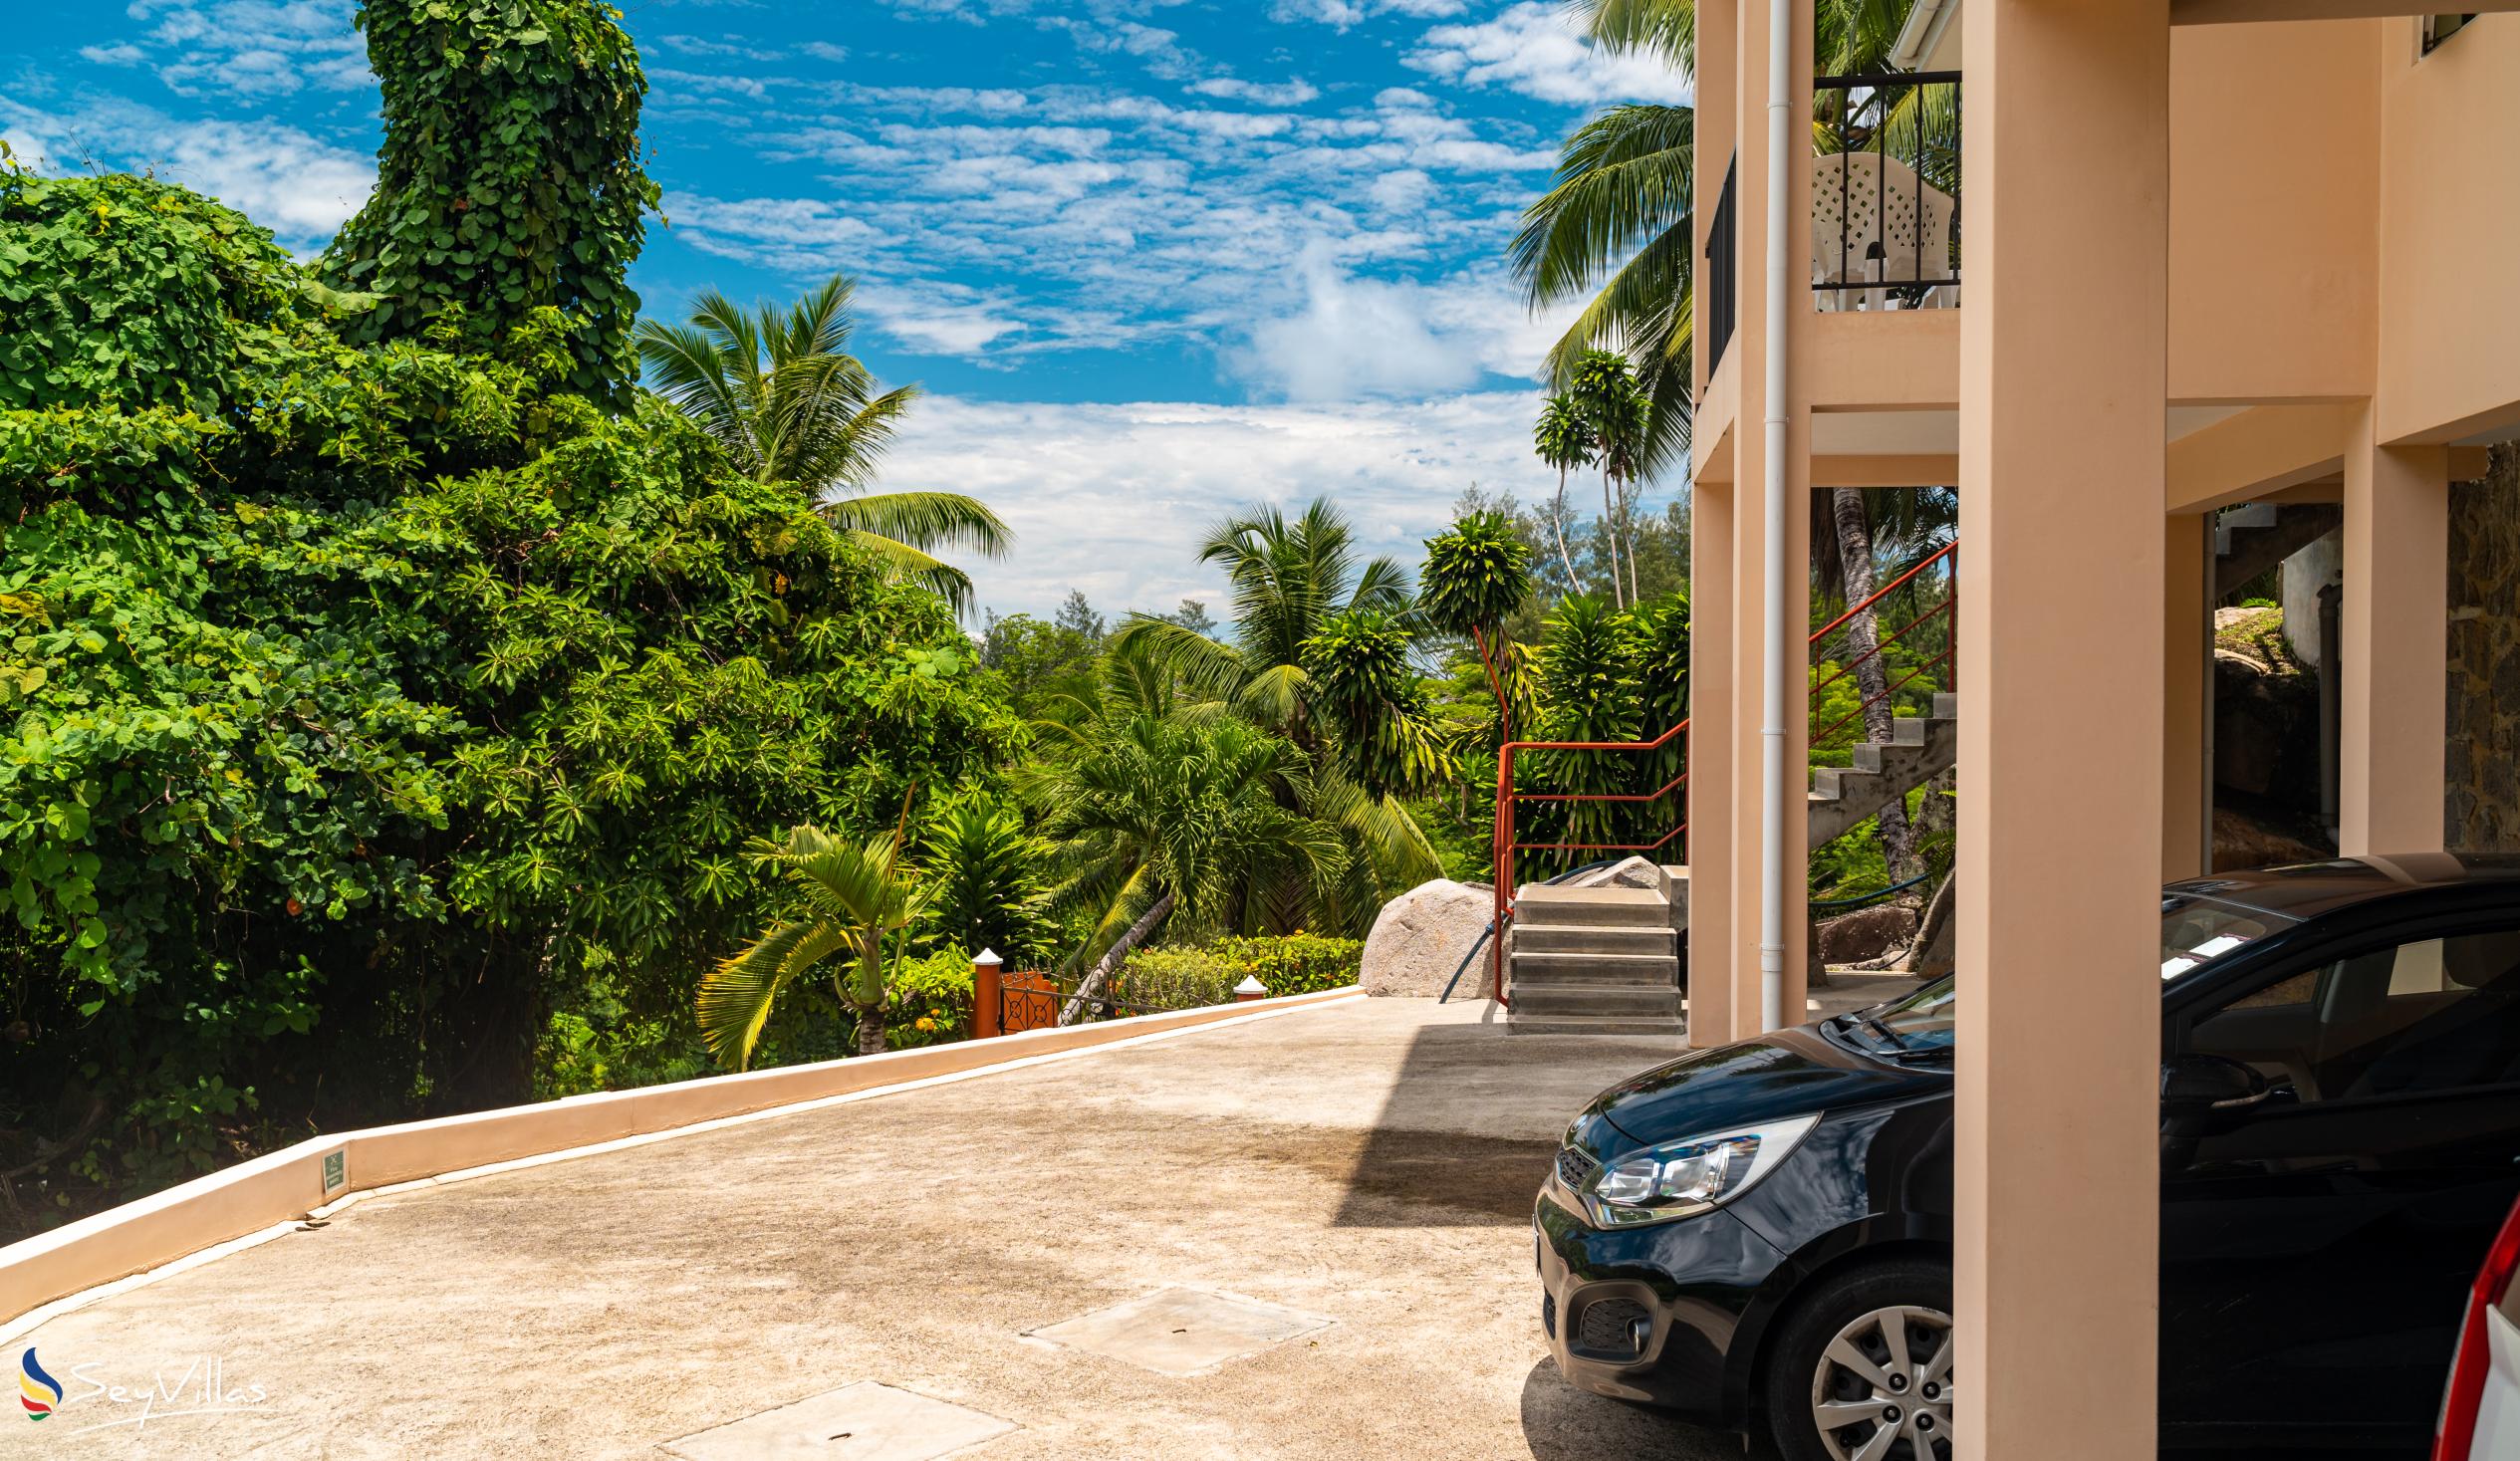 Foto 16: JAIDSS Holiday Apartments - Aussenbereich - Mahé (Seychellen)